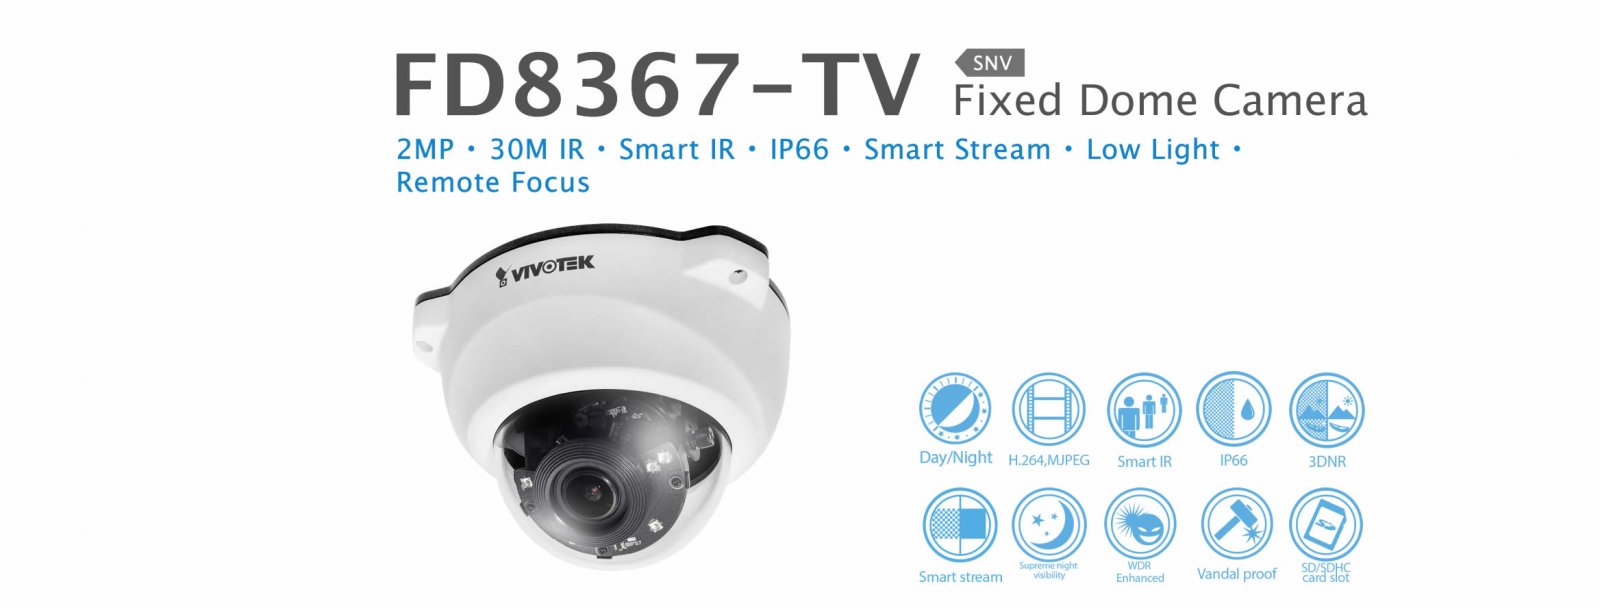 FD8367-TV. Vivotek Fixed Dome Camera